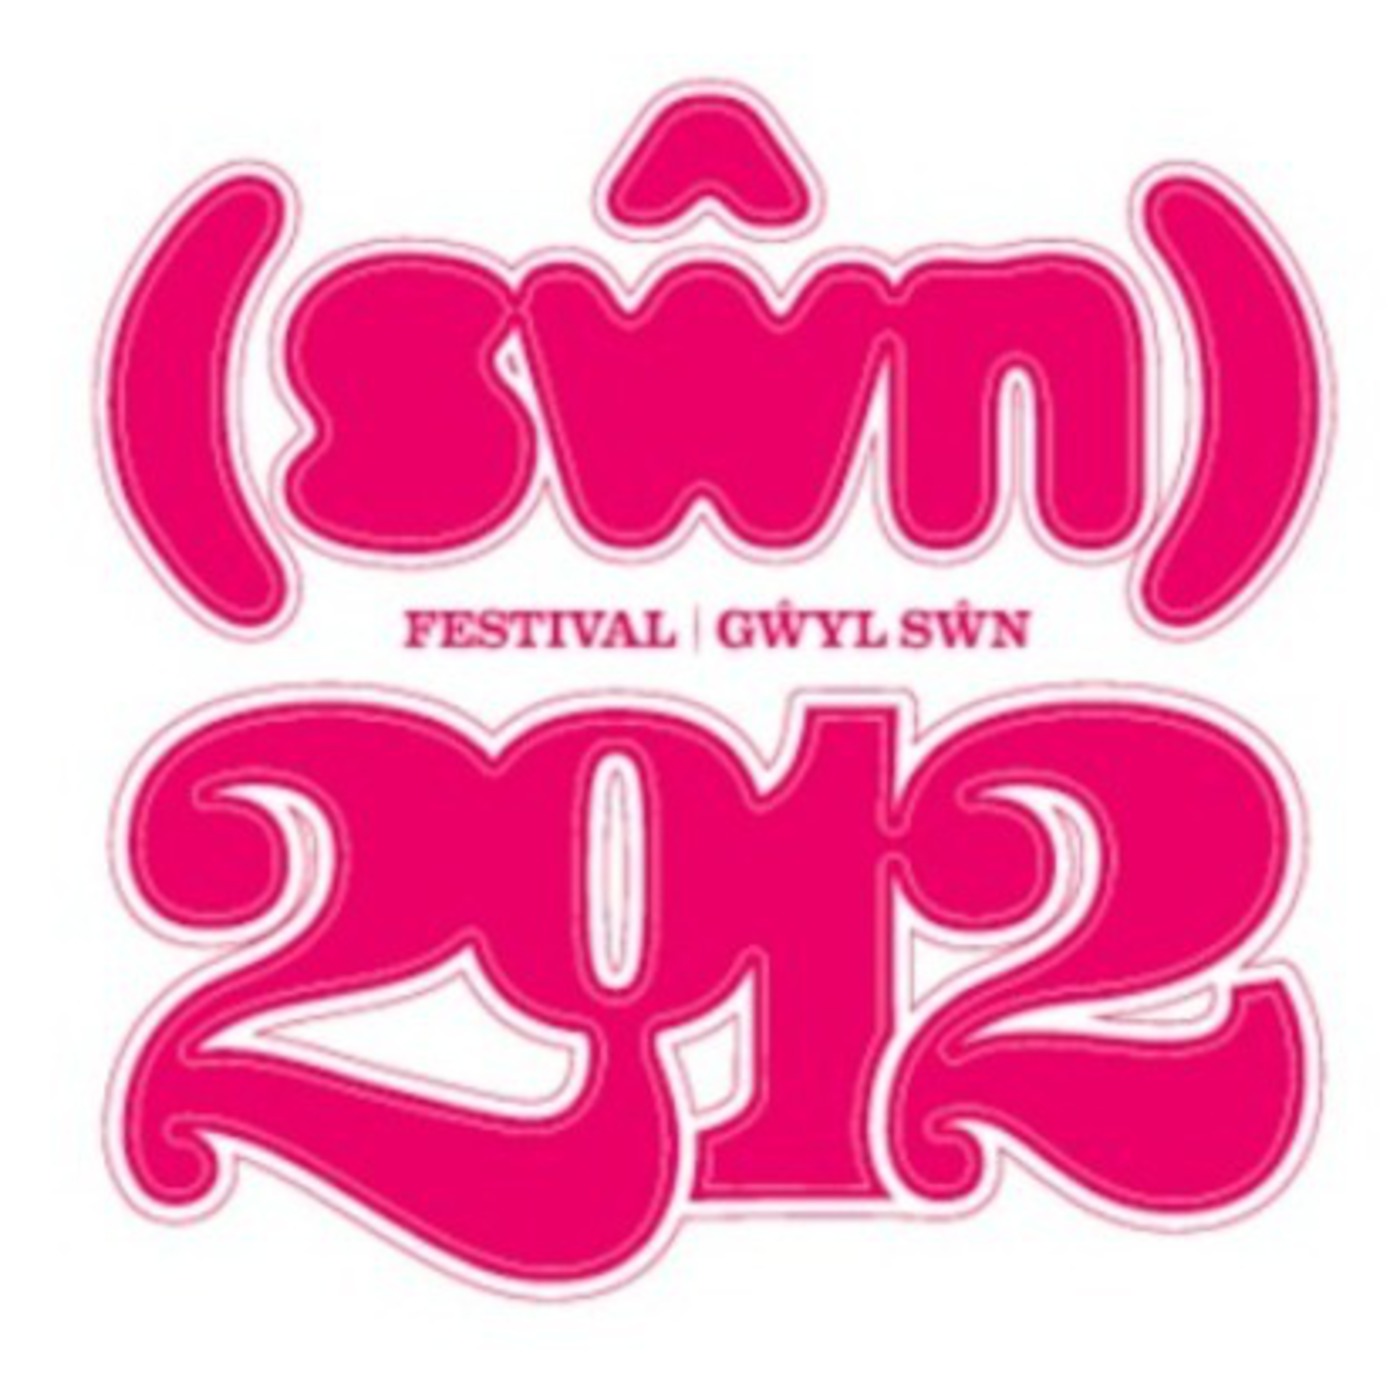 Sŵn Festival 2012 w/ Andrew Backhouse, AlunaGeorge, Frankie & the Heartstrings, Future of the Left, Huw Stephens & Steve Lamacq - 05/11/12